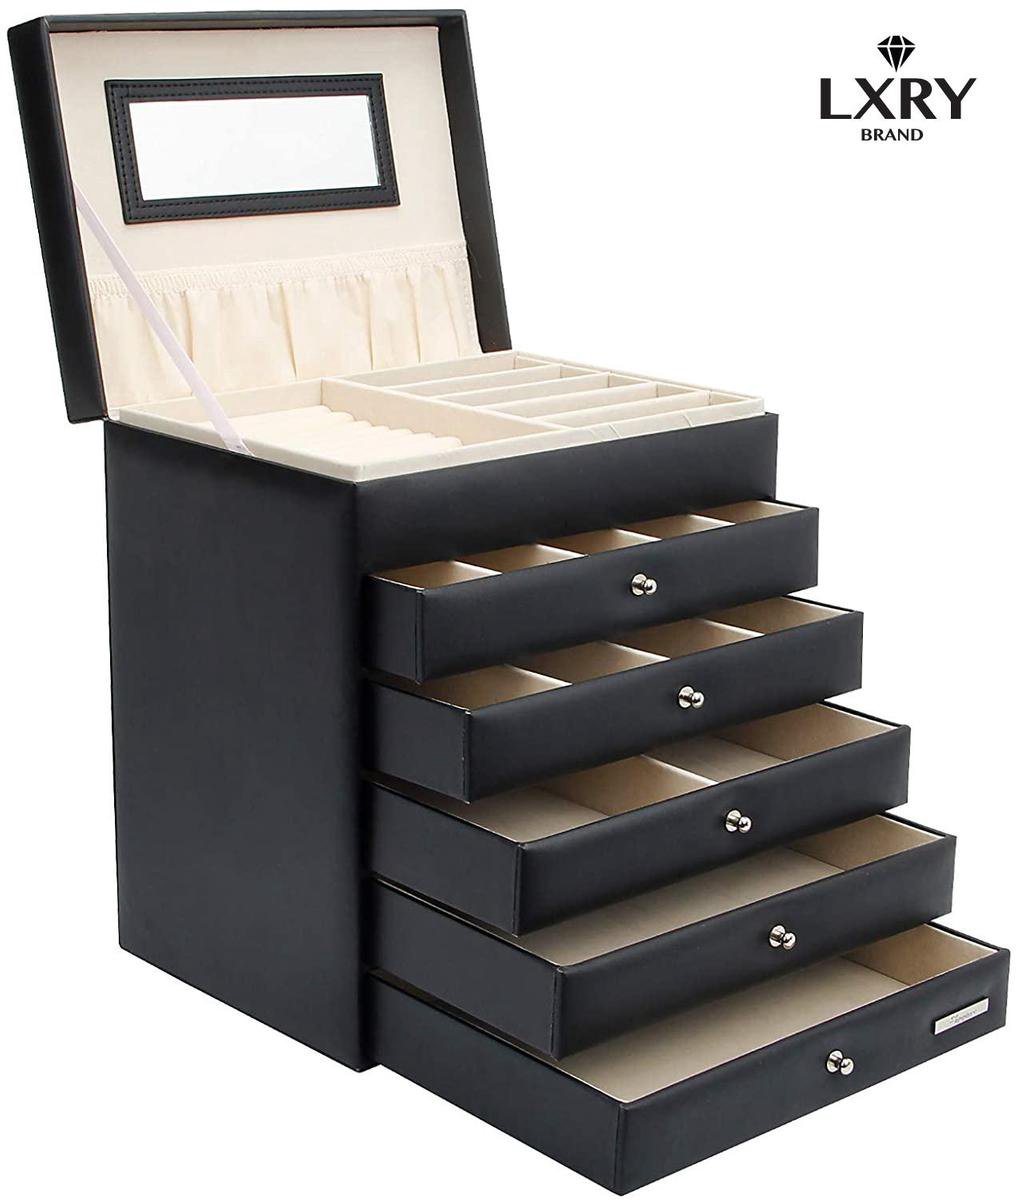 LXRY Sieradendoos met spiegel - Zwart - XL - 6 niveaus - PU Leer - Juwelendoos - Sieraden organizer - Sieradenbox